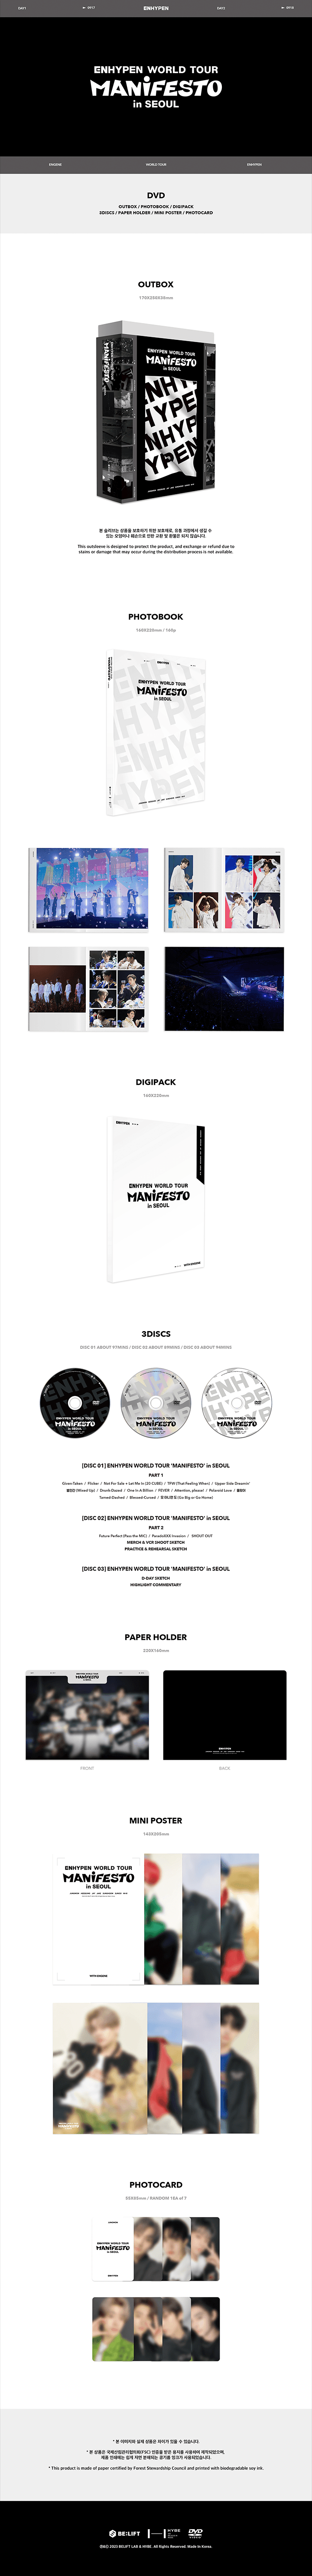 Enhypen World Tour Manifesto in Seoul DVD